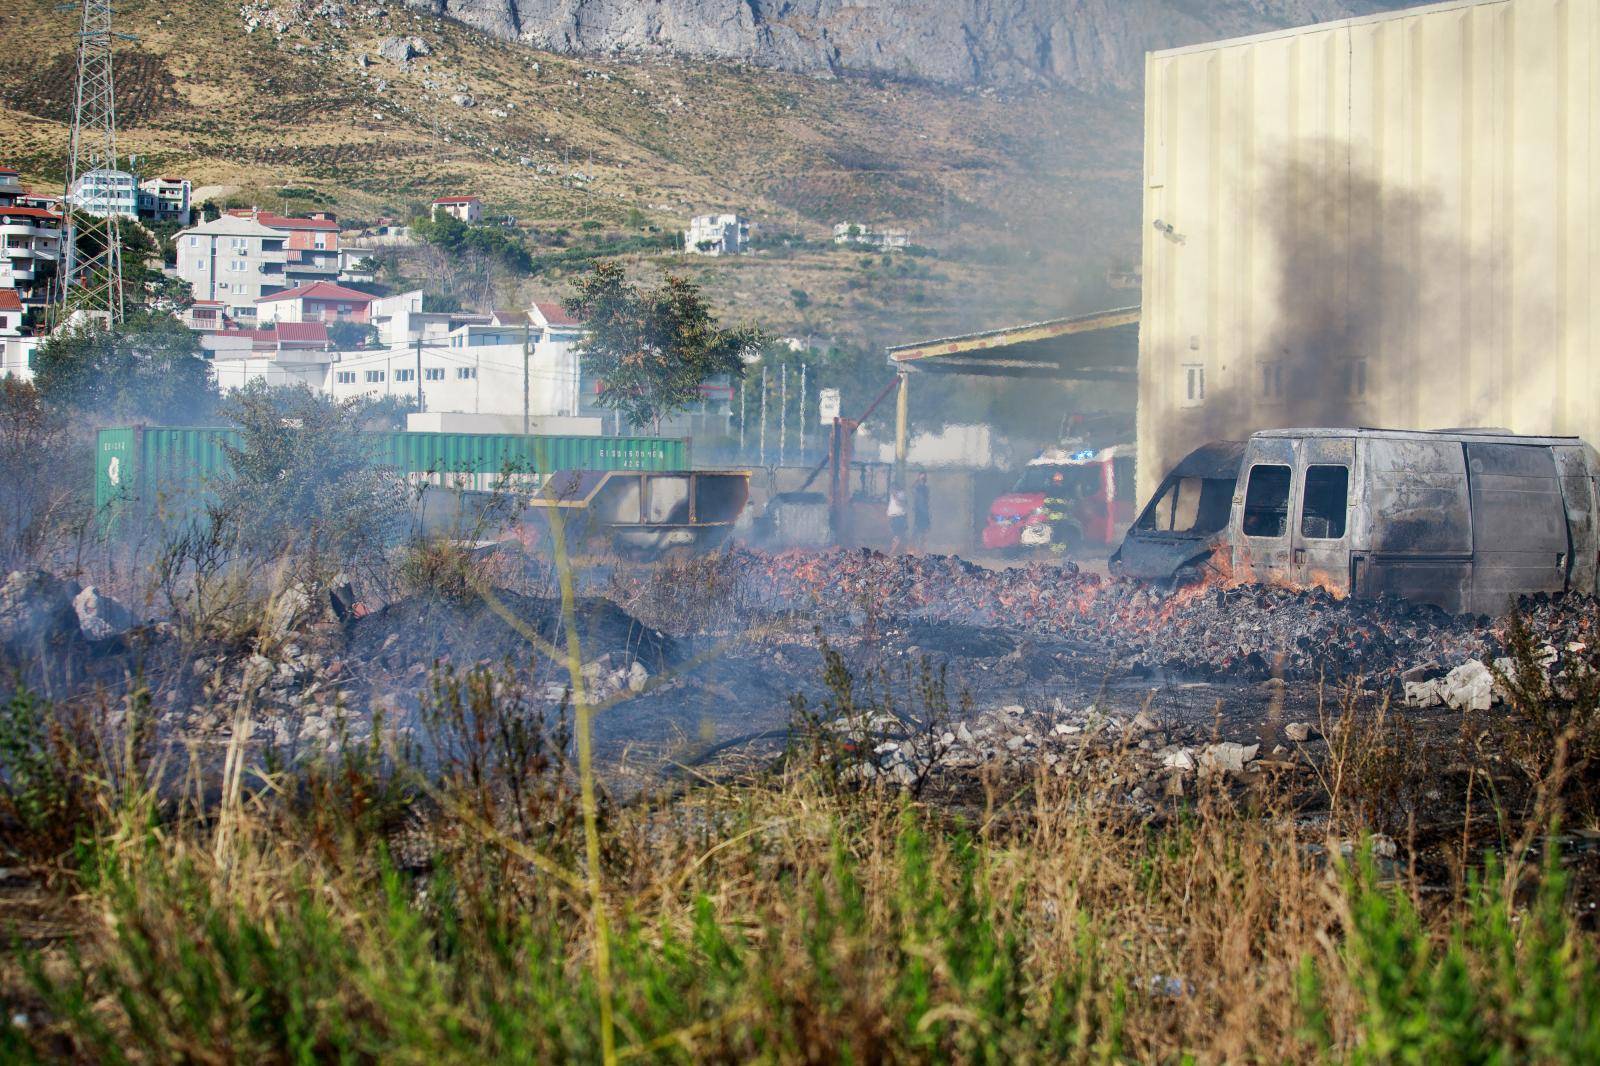 Opet požar u splitskom TTTS-u: Izgorjelo je osam kombija